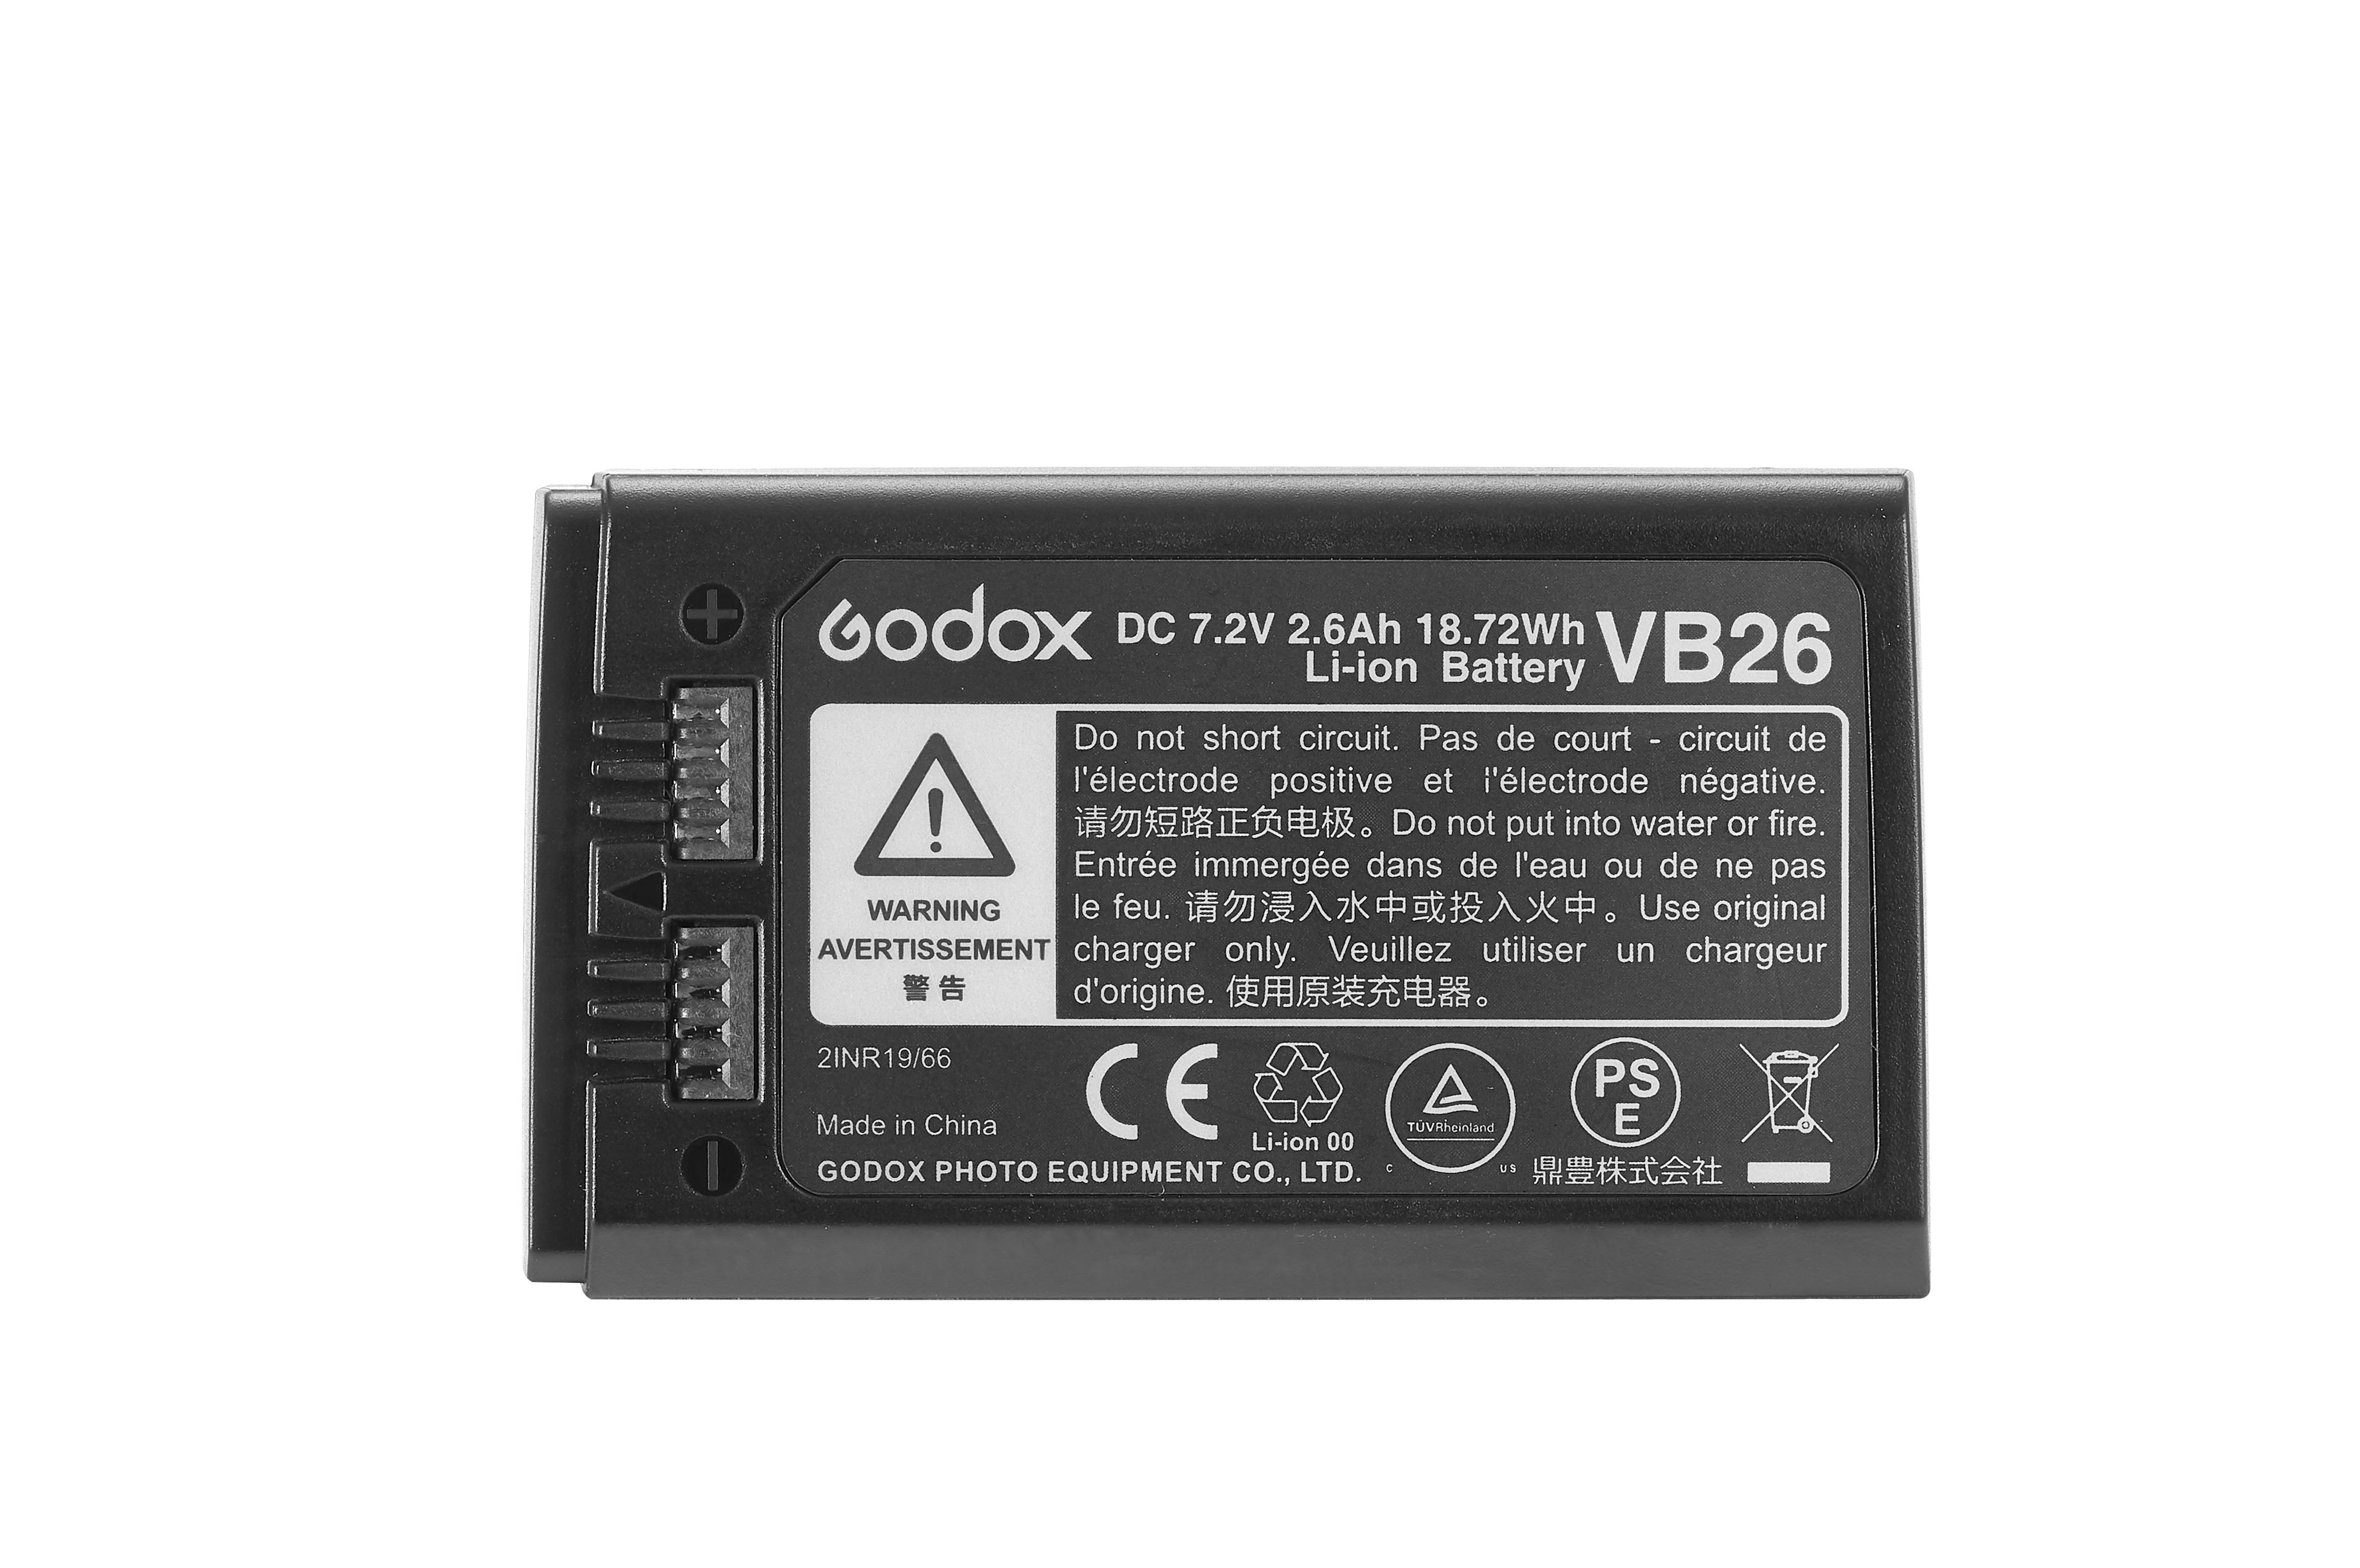 GODOX V860III Systemblitzgerät für Olympus manuell) (60, automatisch